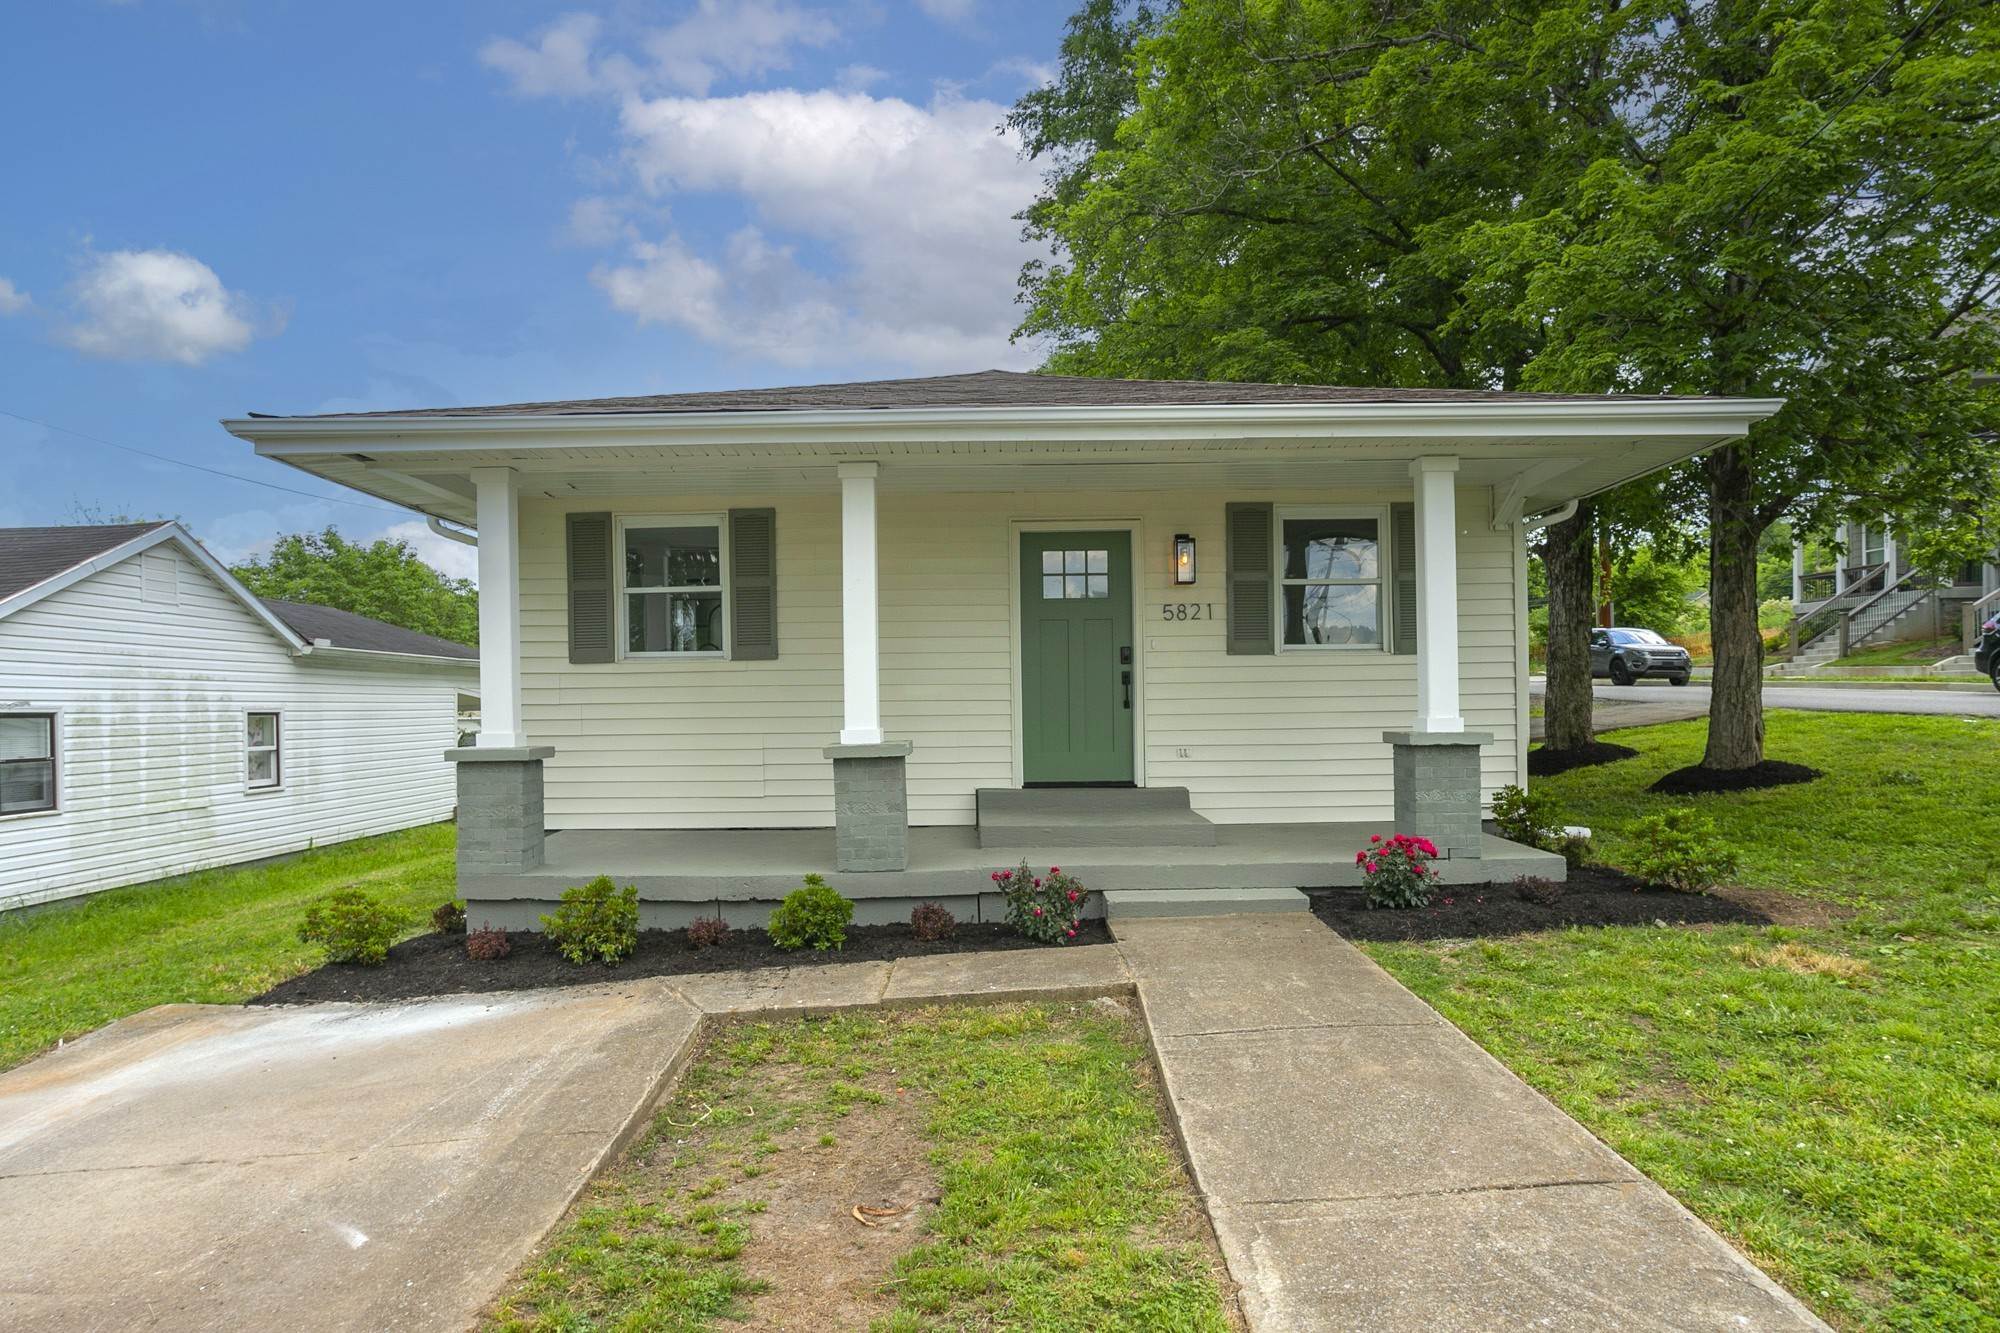 Property for Sale at 5821 Leslie Avenue Nashville, Tennessee 37209 United States